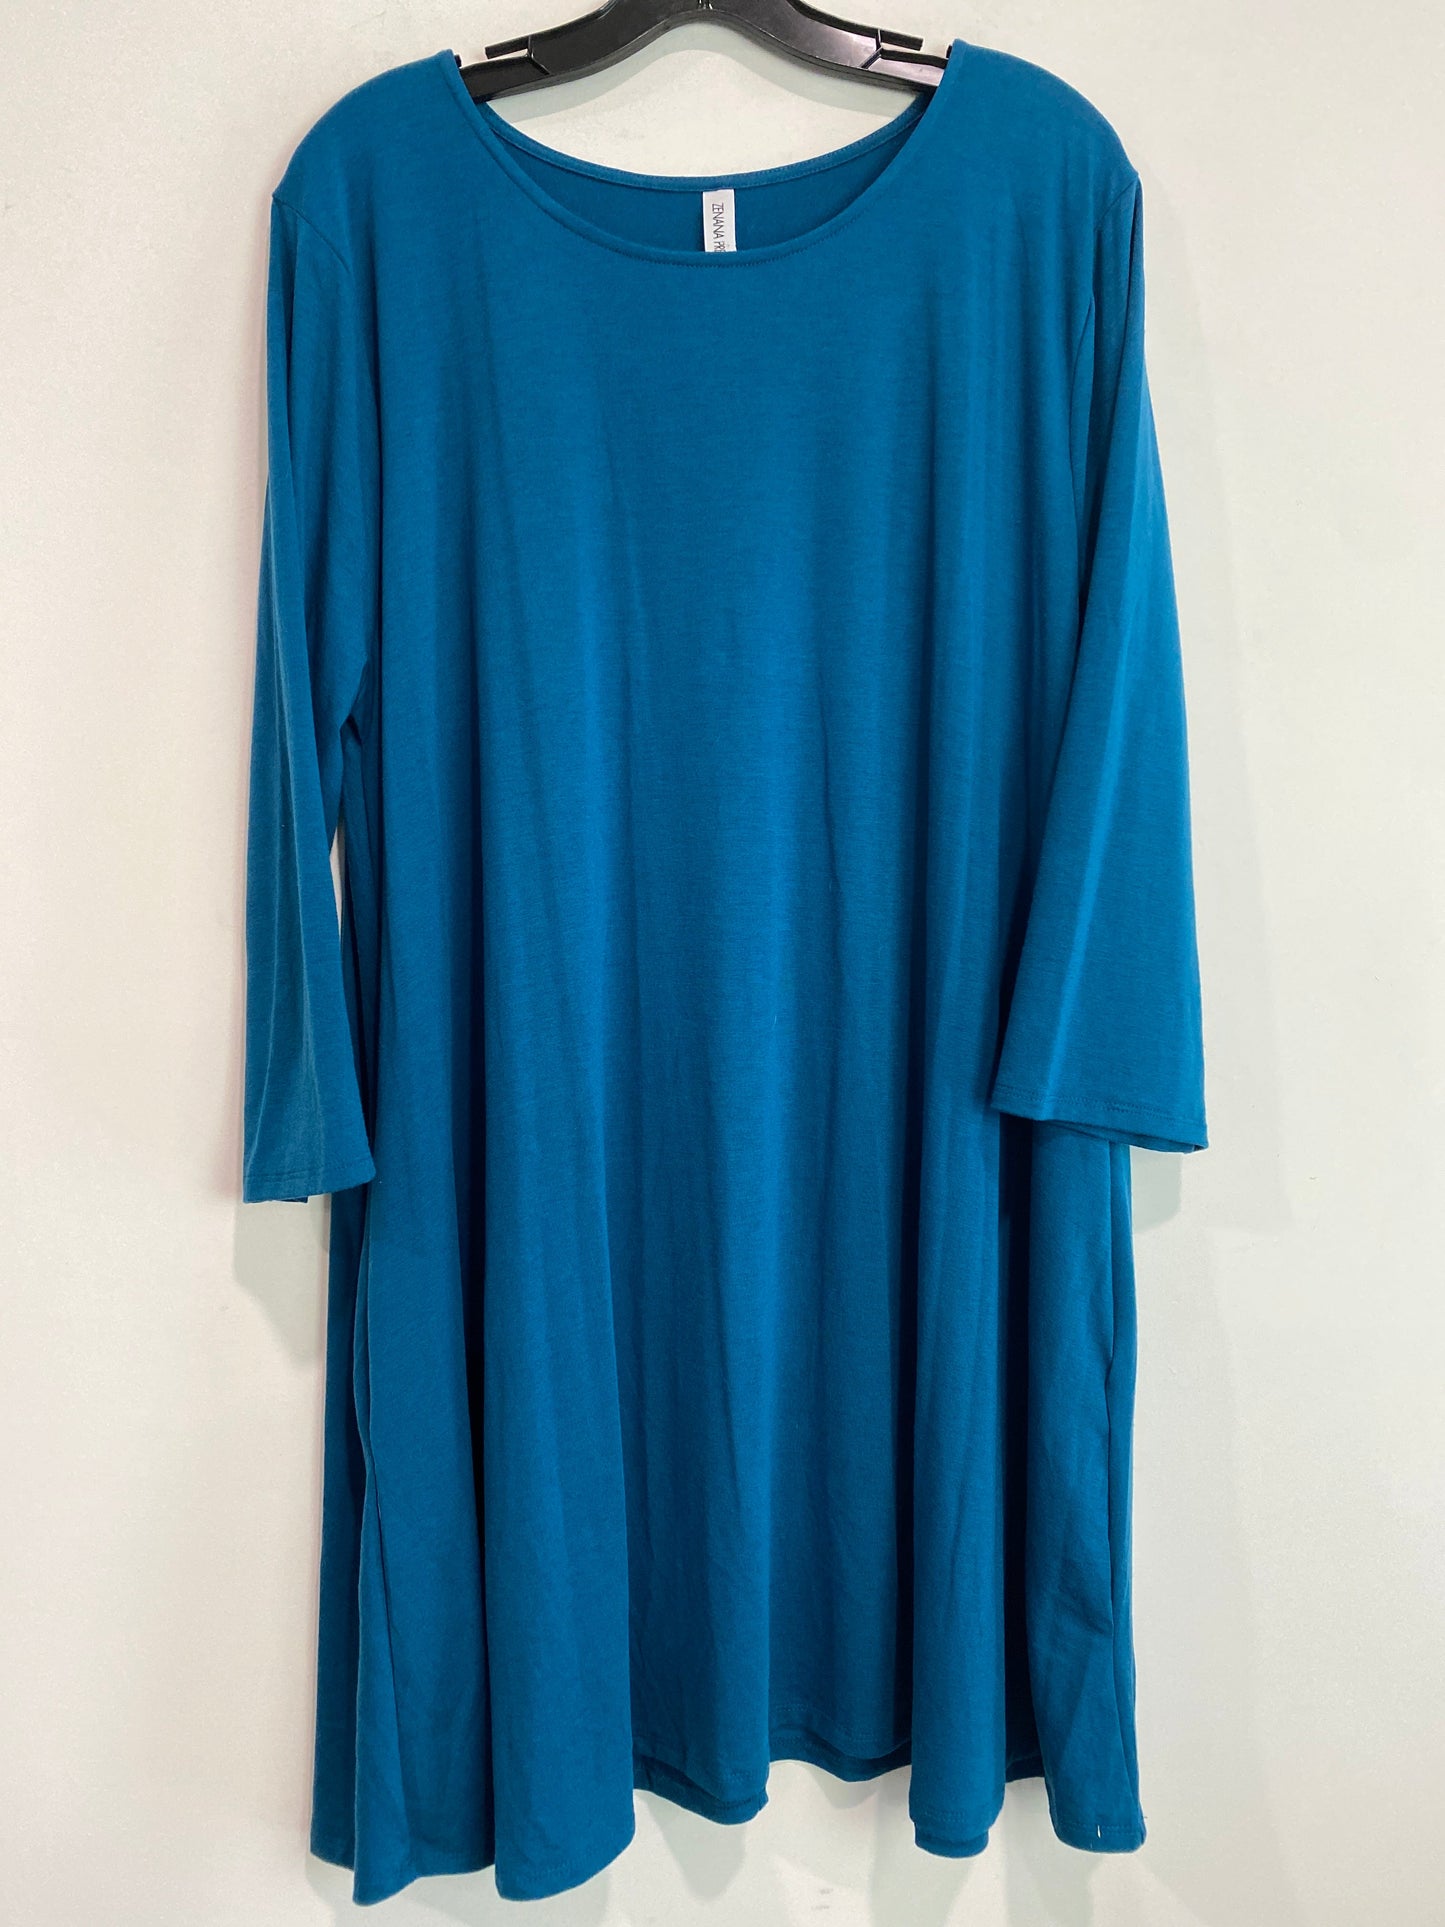 Blue Tunic 3/4 Sleeve Zenana Outfitters, Size 3x